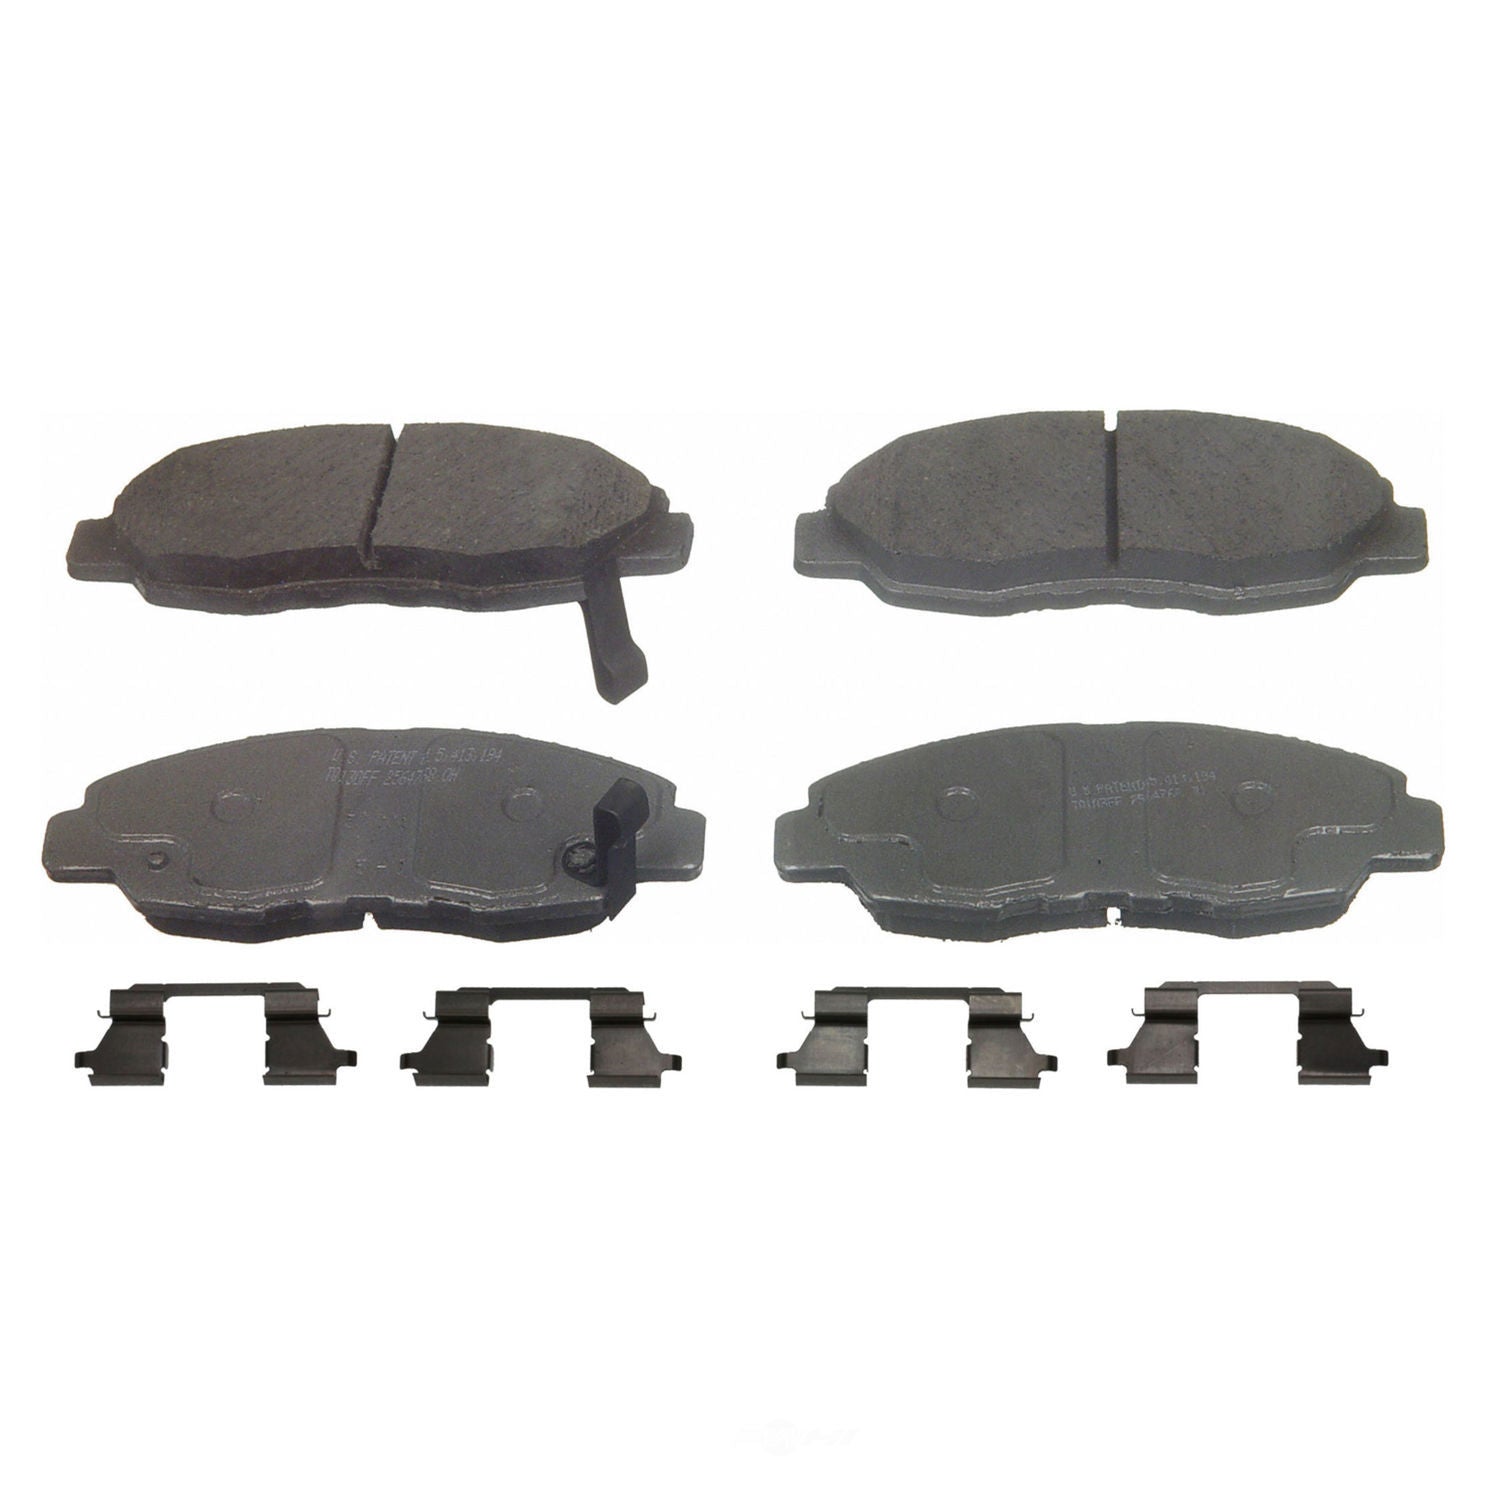 New set of front ceramic brake pads for Honda Civic, Insight, &  Acura EL QC456A